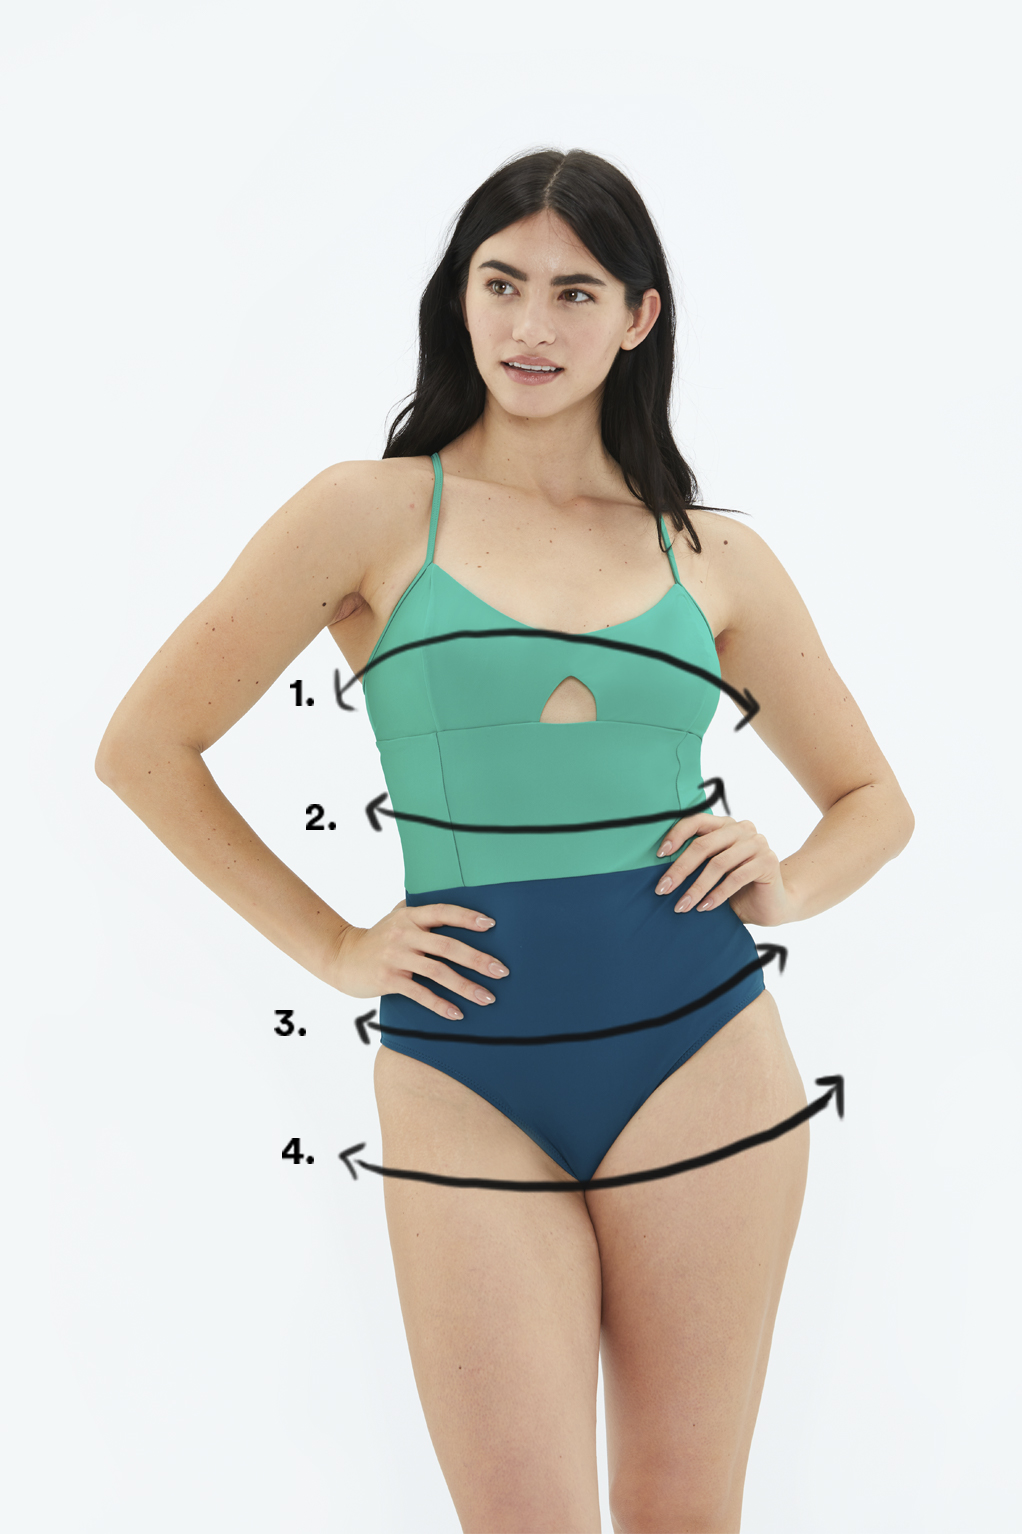 TopLLC Womens Sporty Summer Bathing Suit Color Block Plus Size